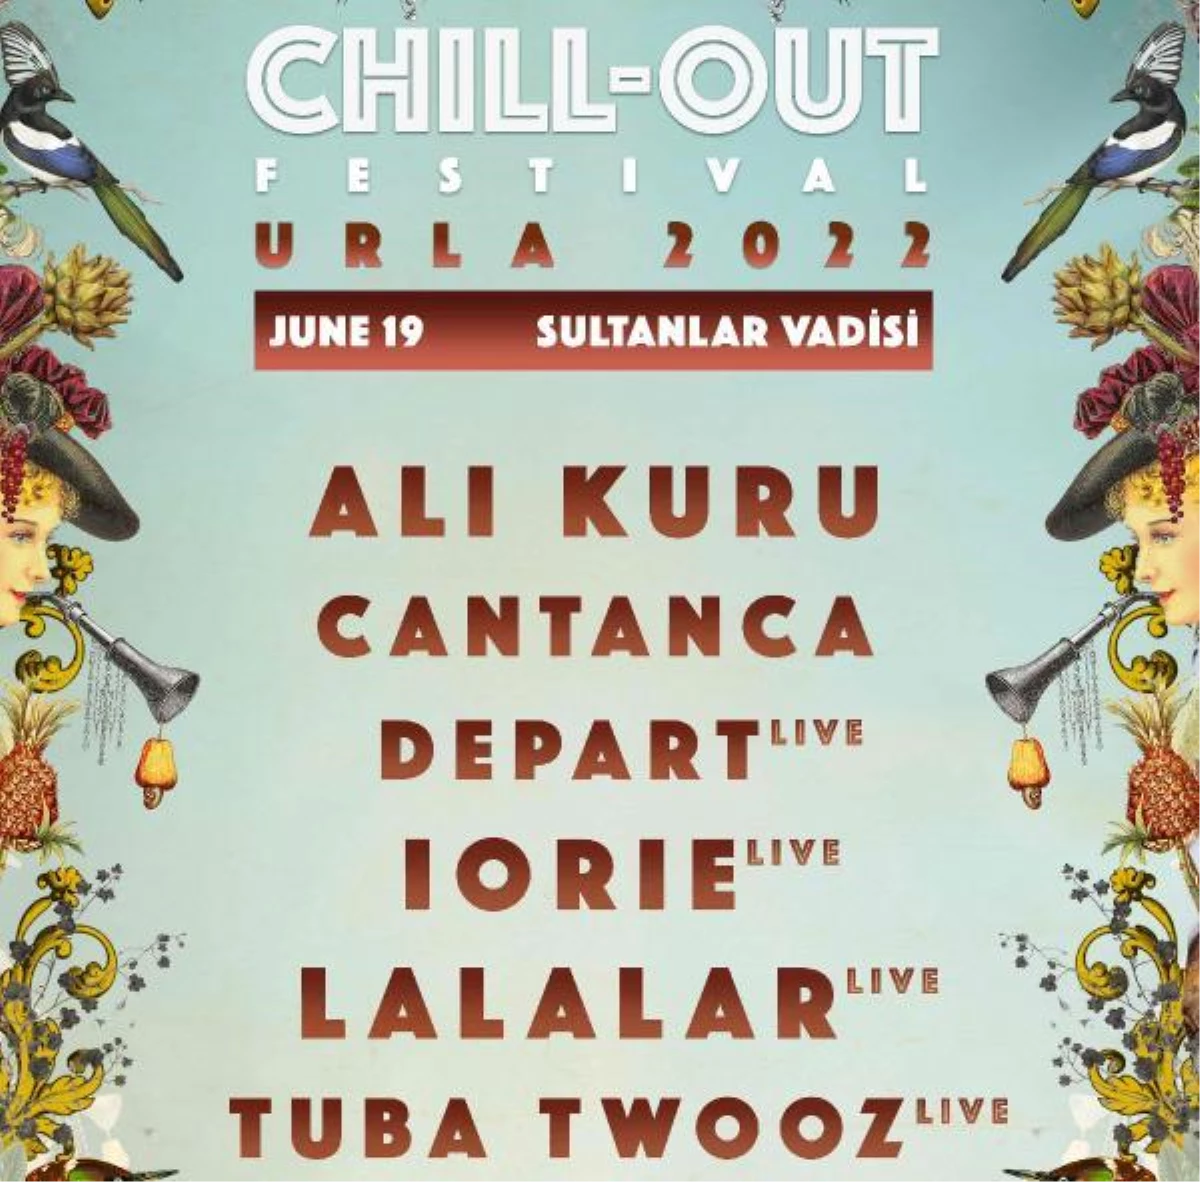 ChillOut Festival ilk kez Urla'da Haberler